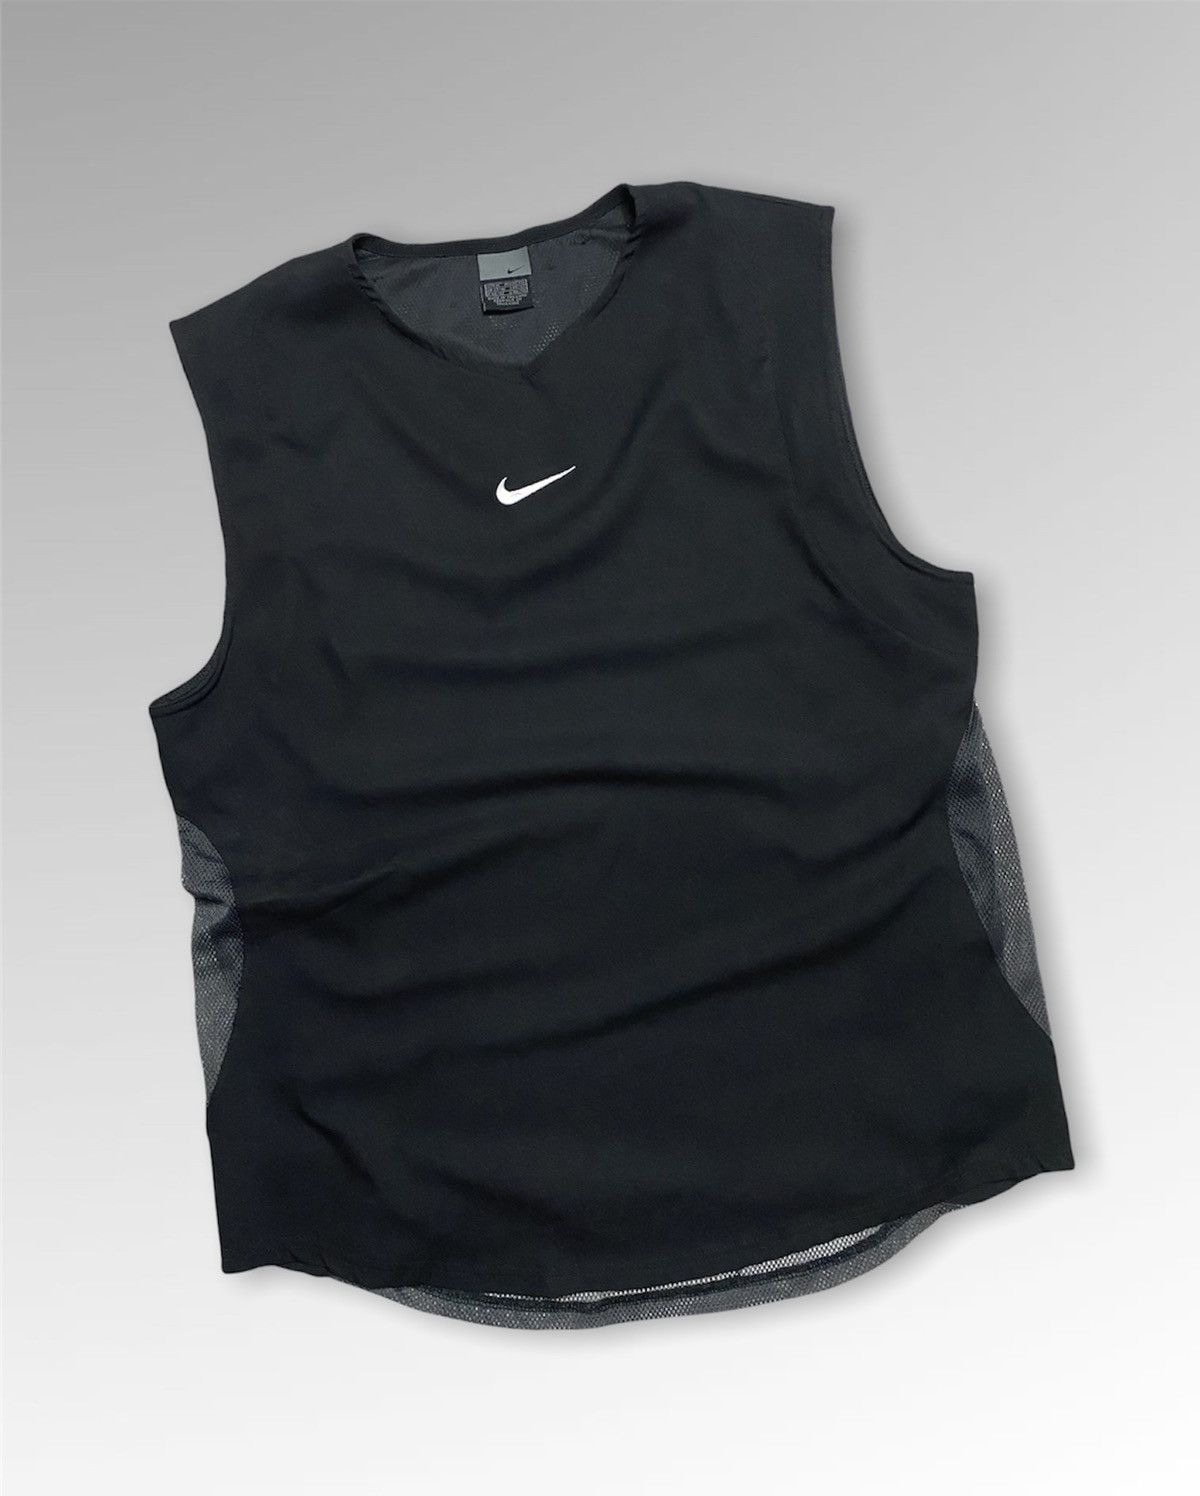 Nike Nike Vintage Drill black tank tops vest centr logo y2k rare | Grailed